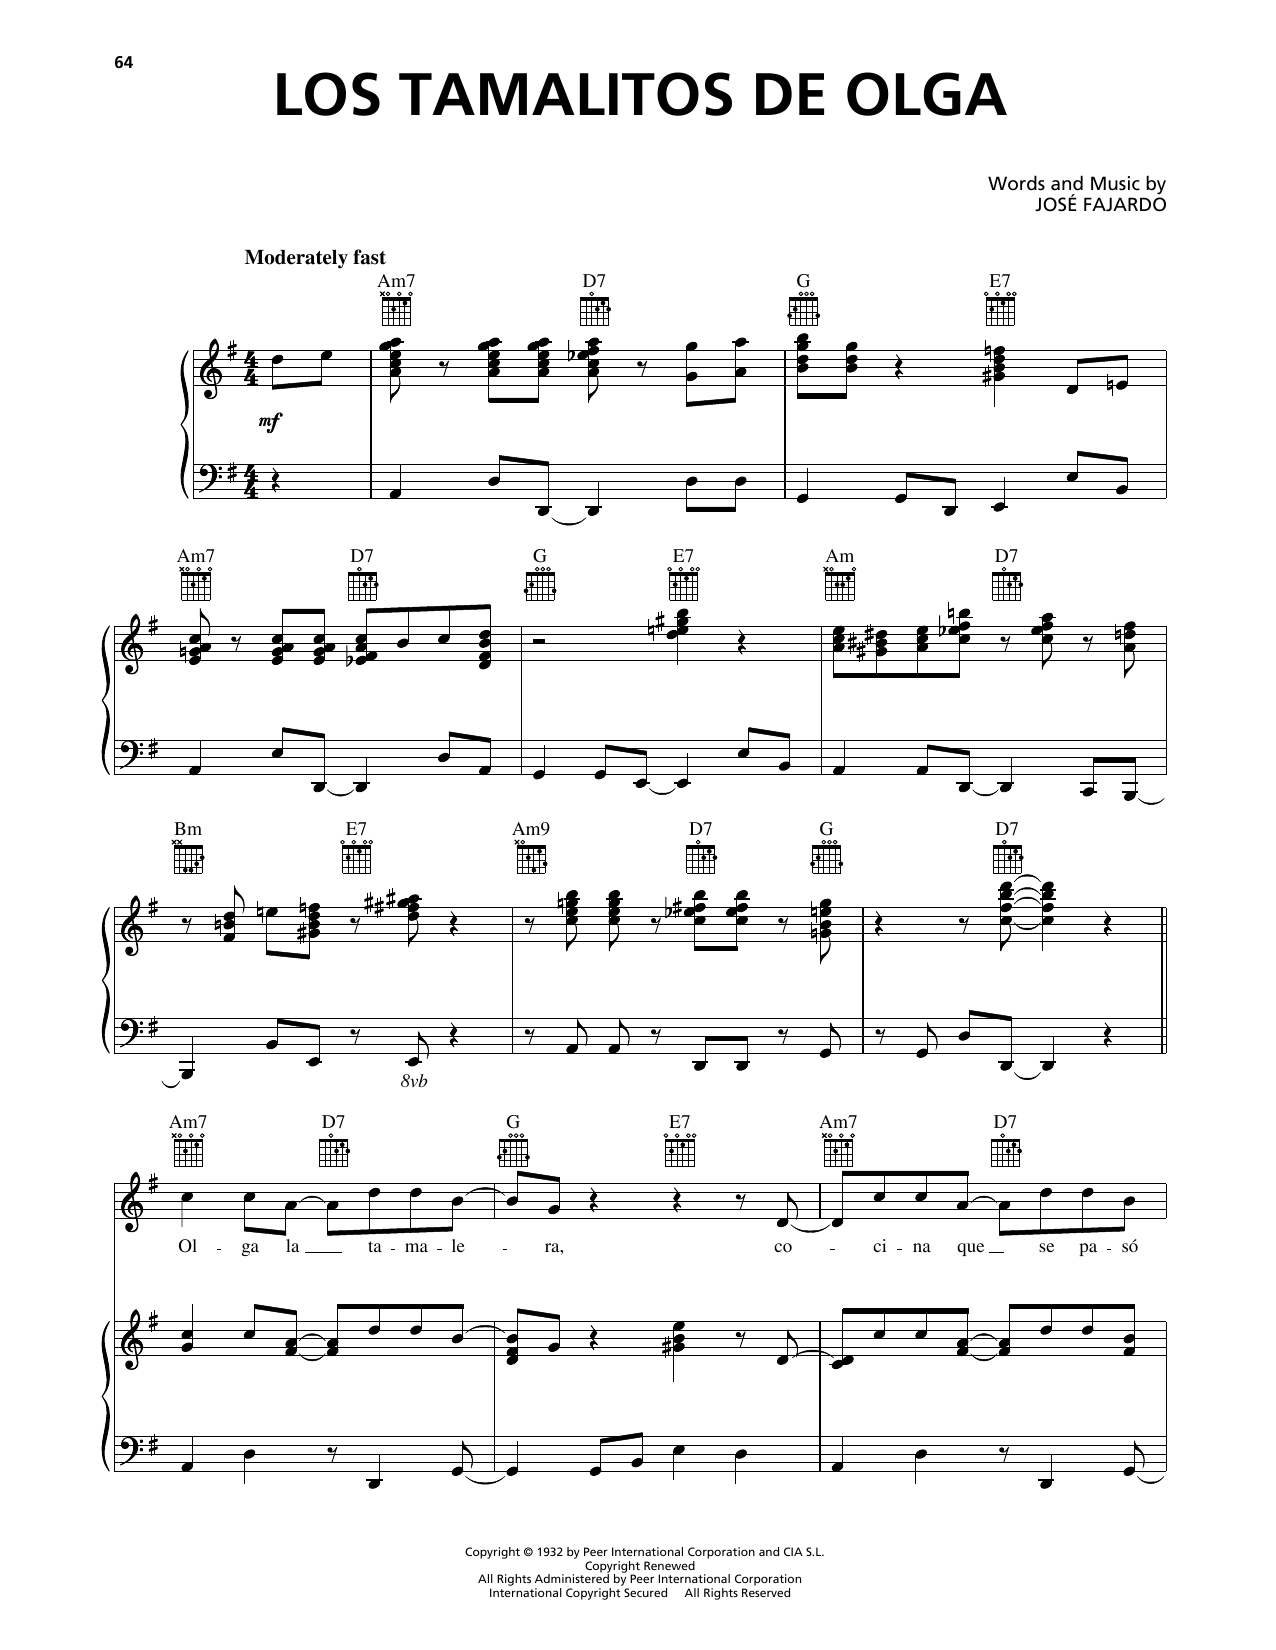 Jose Fajardo Los Tamalitos de Olga Sheet Music Notes & Chords for Piano, Vocal & Guitar Chords (Right-Hand Melody) - Download or Print PDF